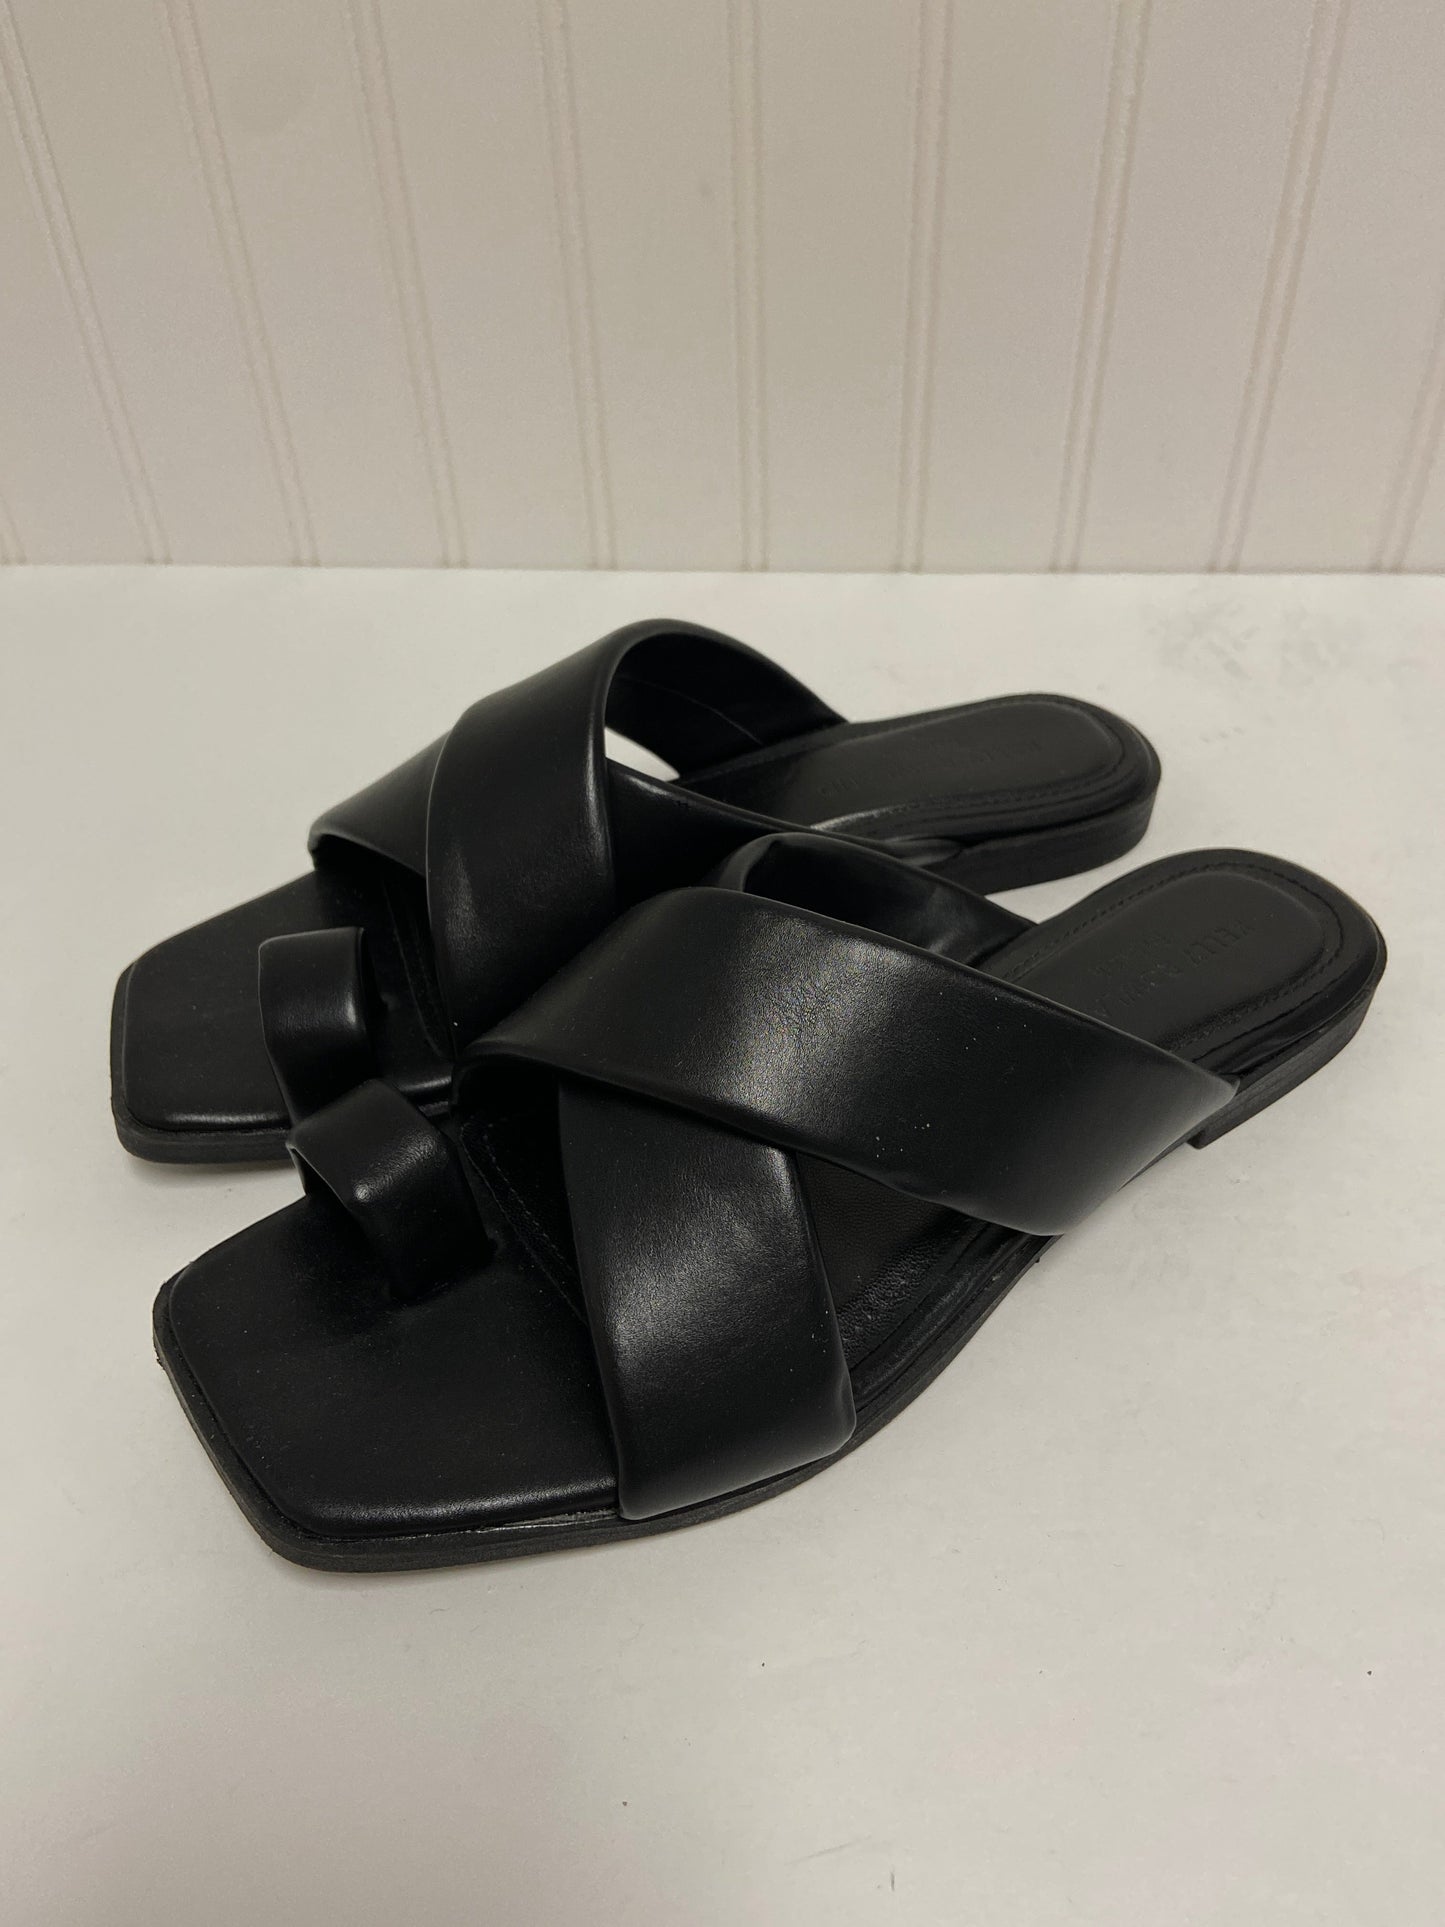 Black Sandals Flats Clothes Mentor, Size 8